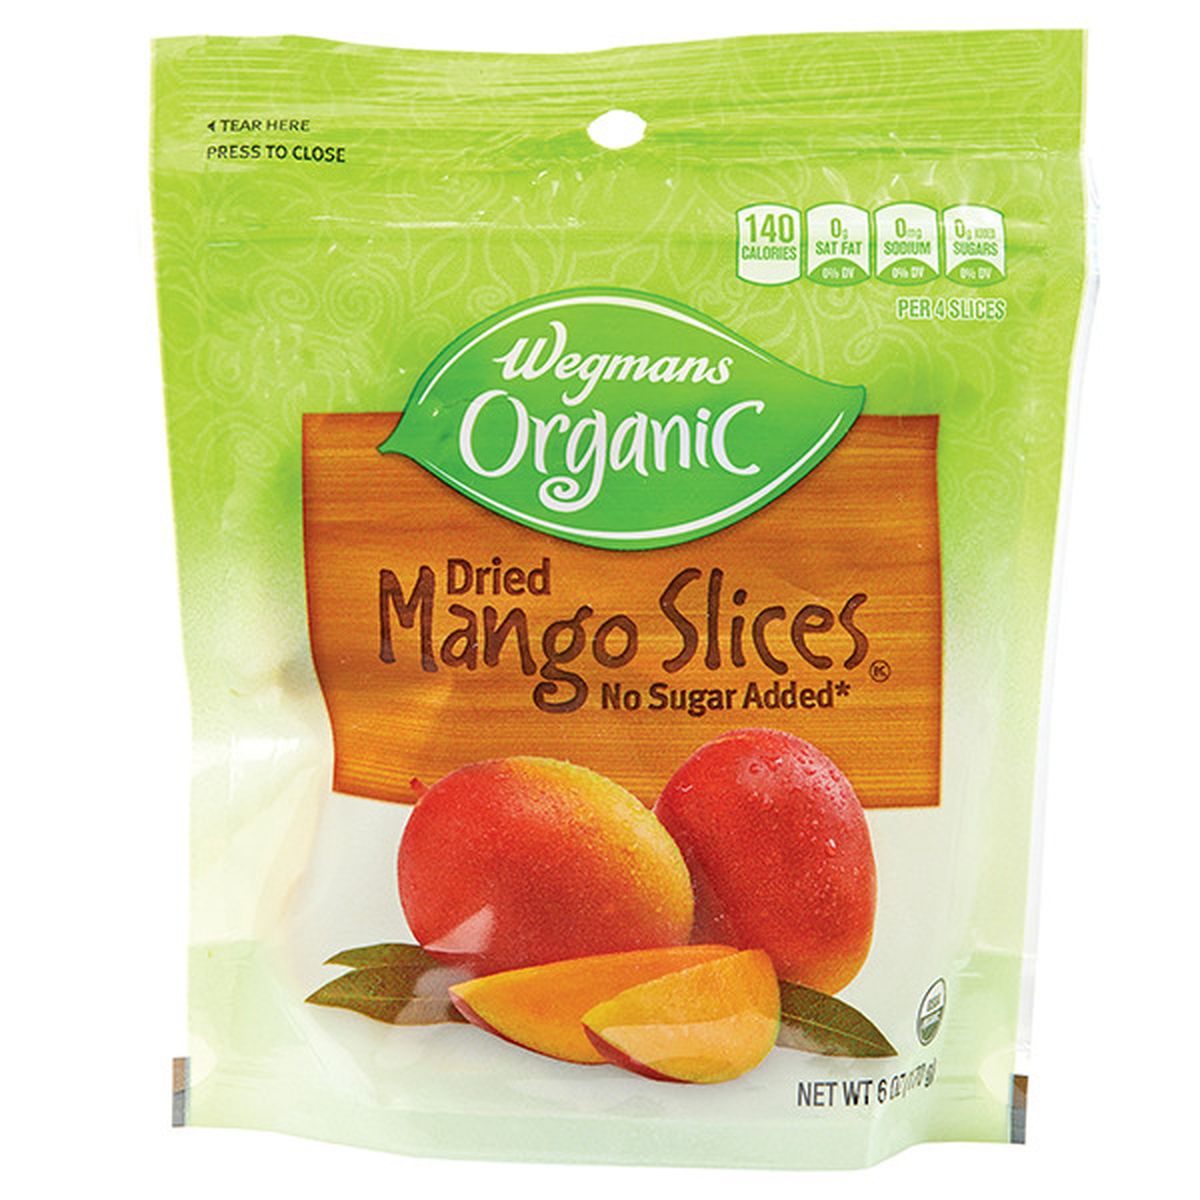 Calories in Wegmans Organic Dried Mango Slices